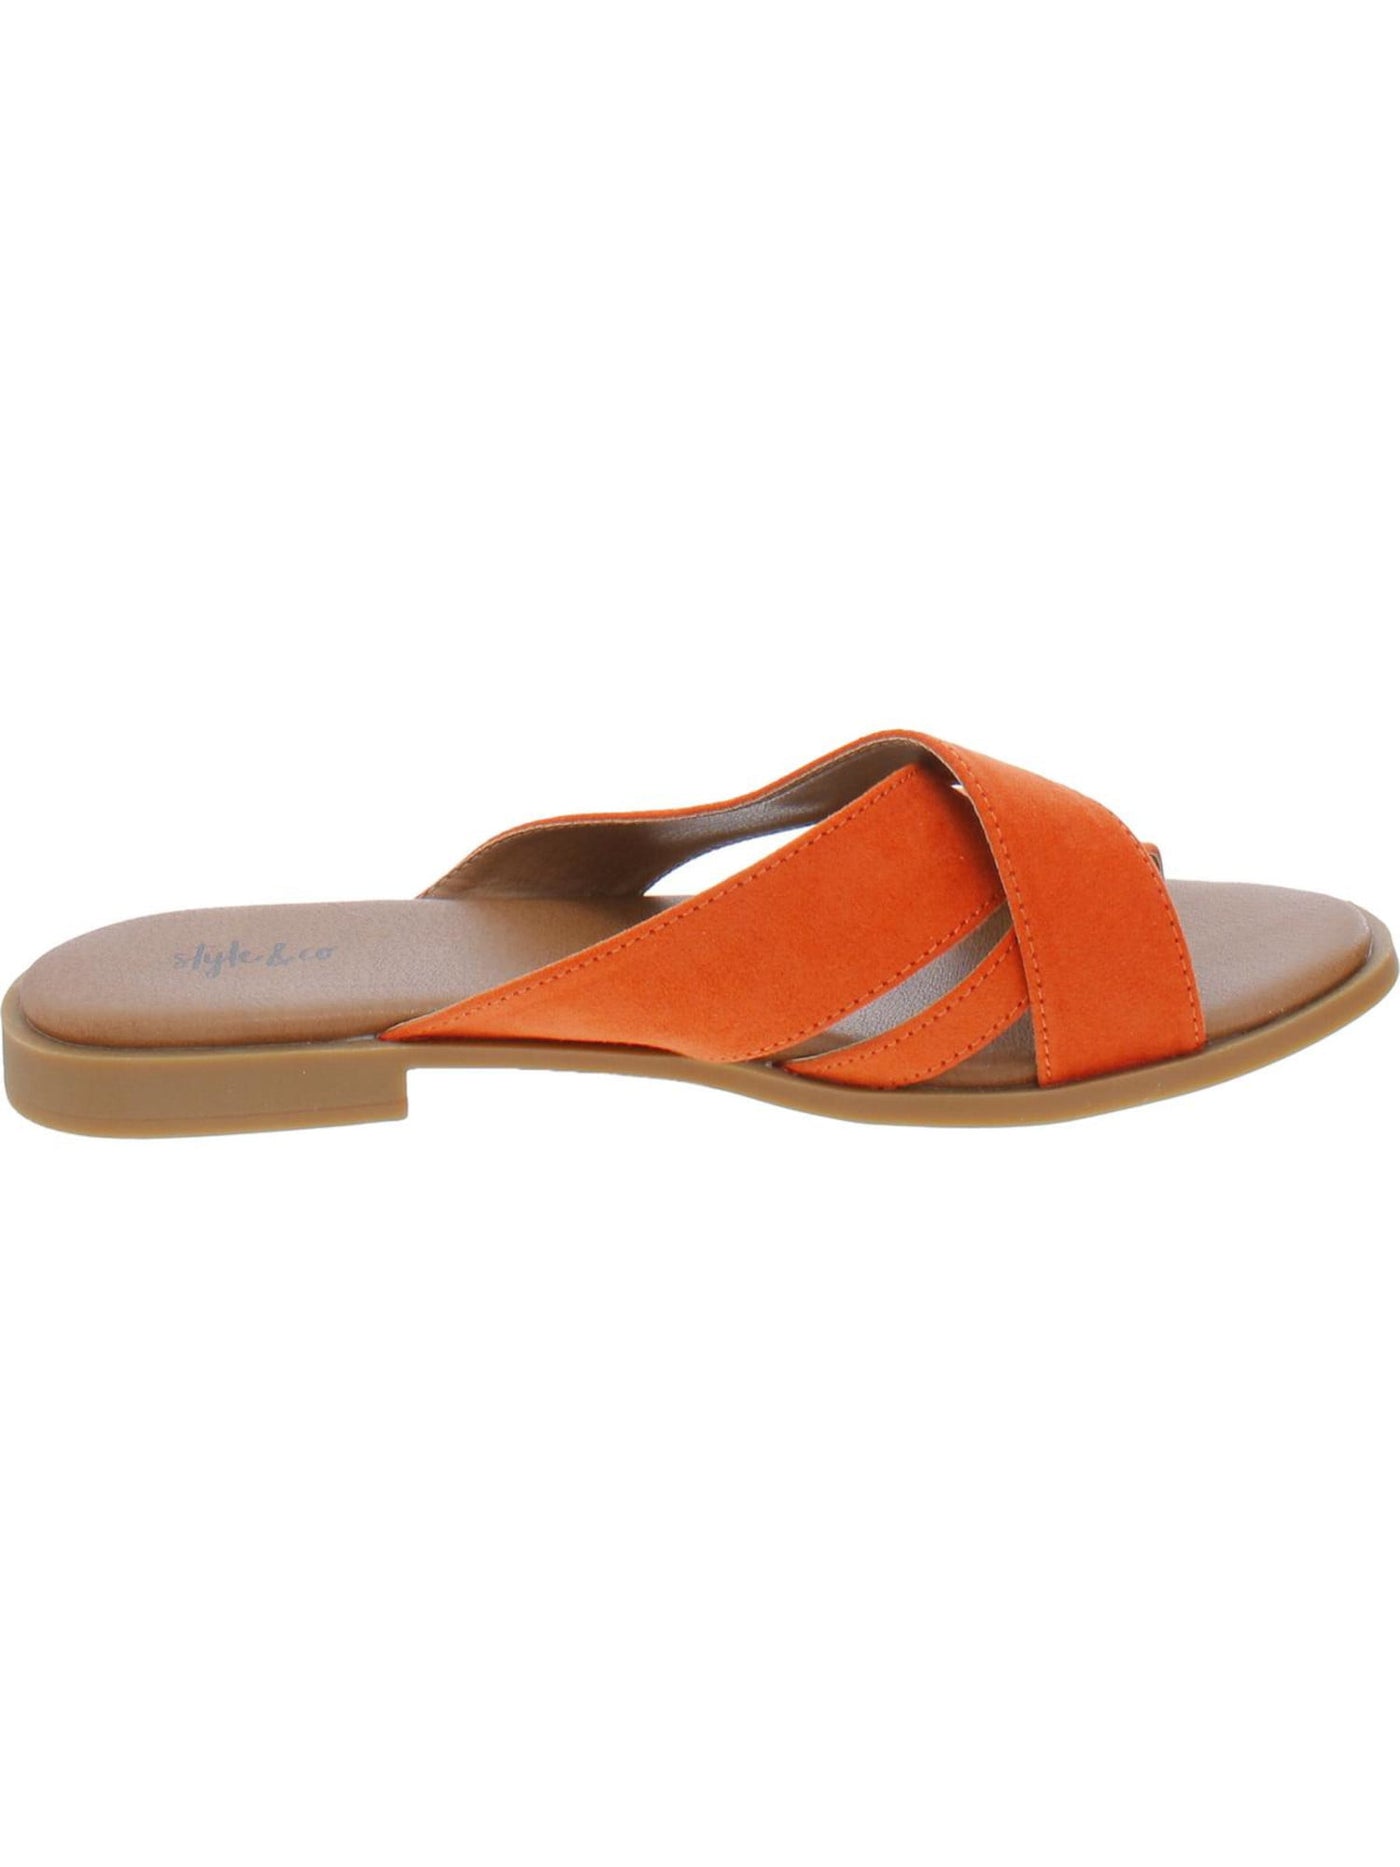 STYLE & COMPANY Womens Orange Cushioned Carolyn Round Toe Slip On Sandals Shoes 6 M